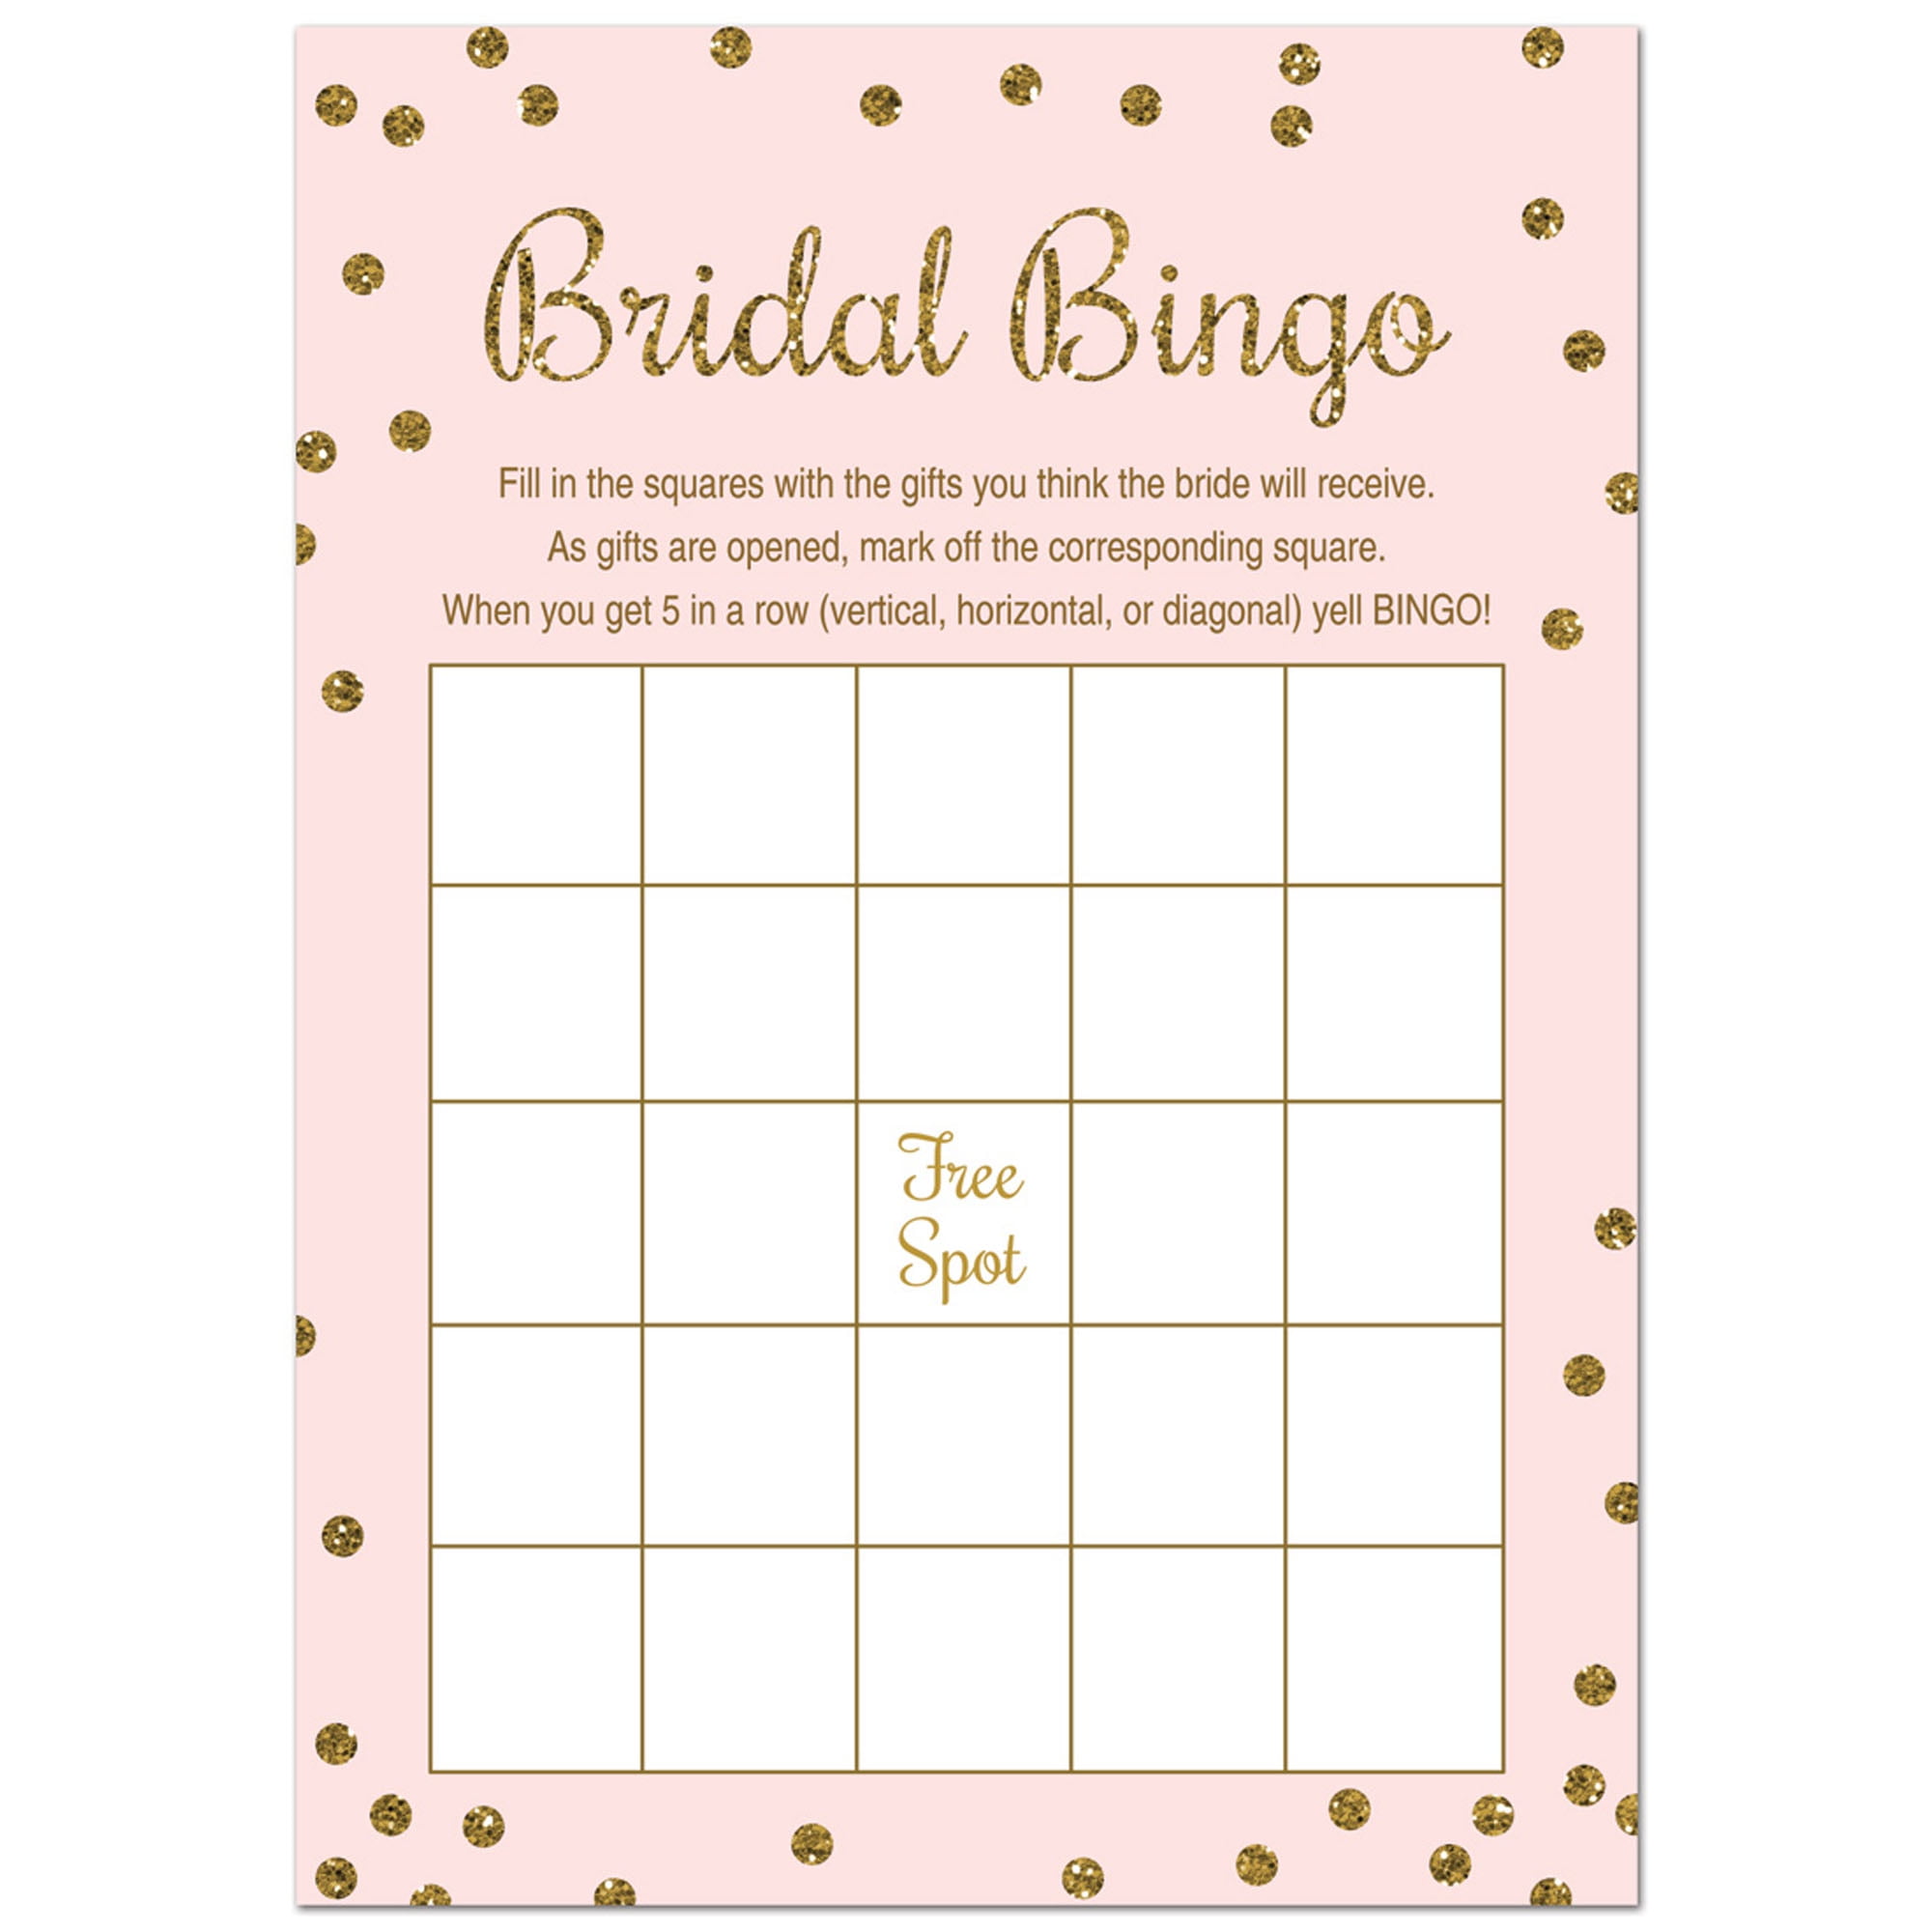 View Printable Bridal Shower Bingo Game Images Printables Collection